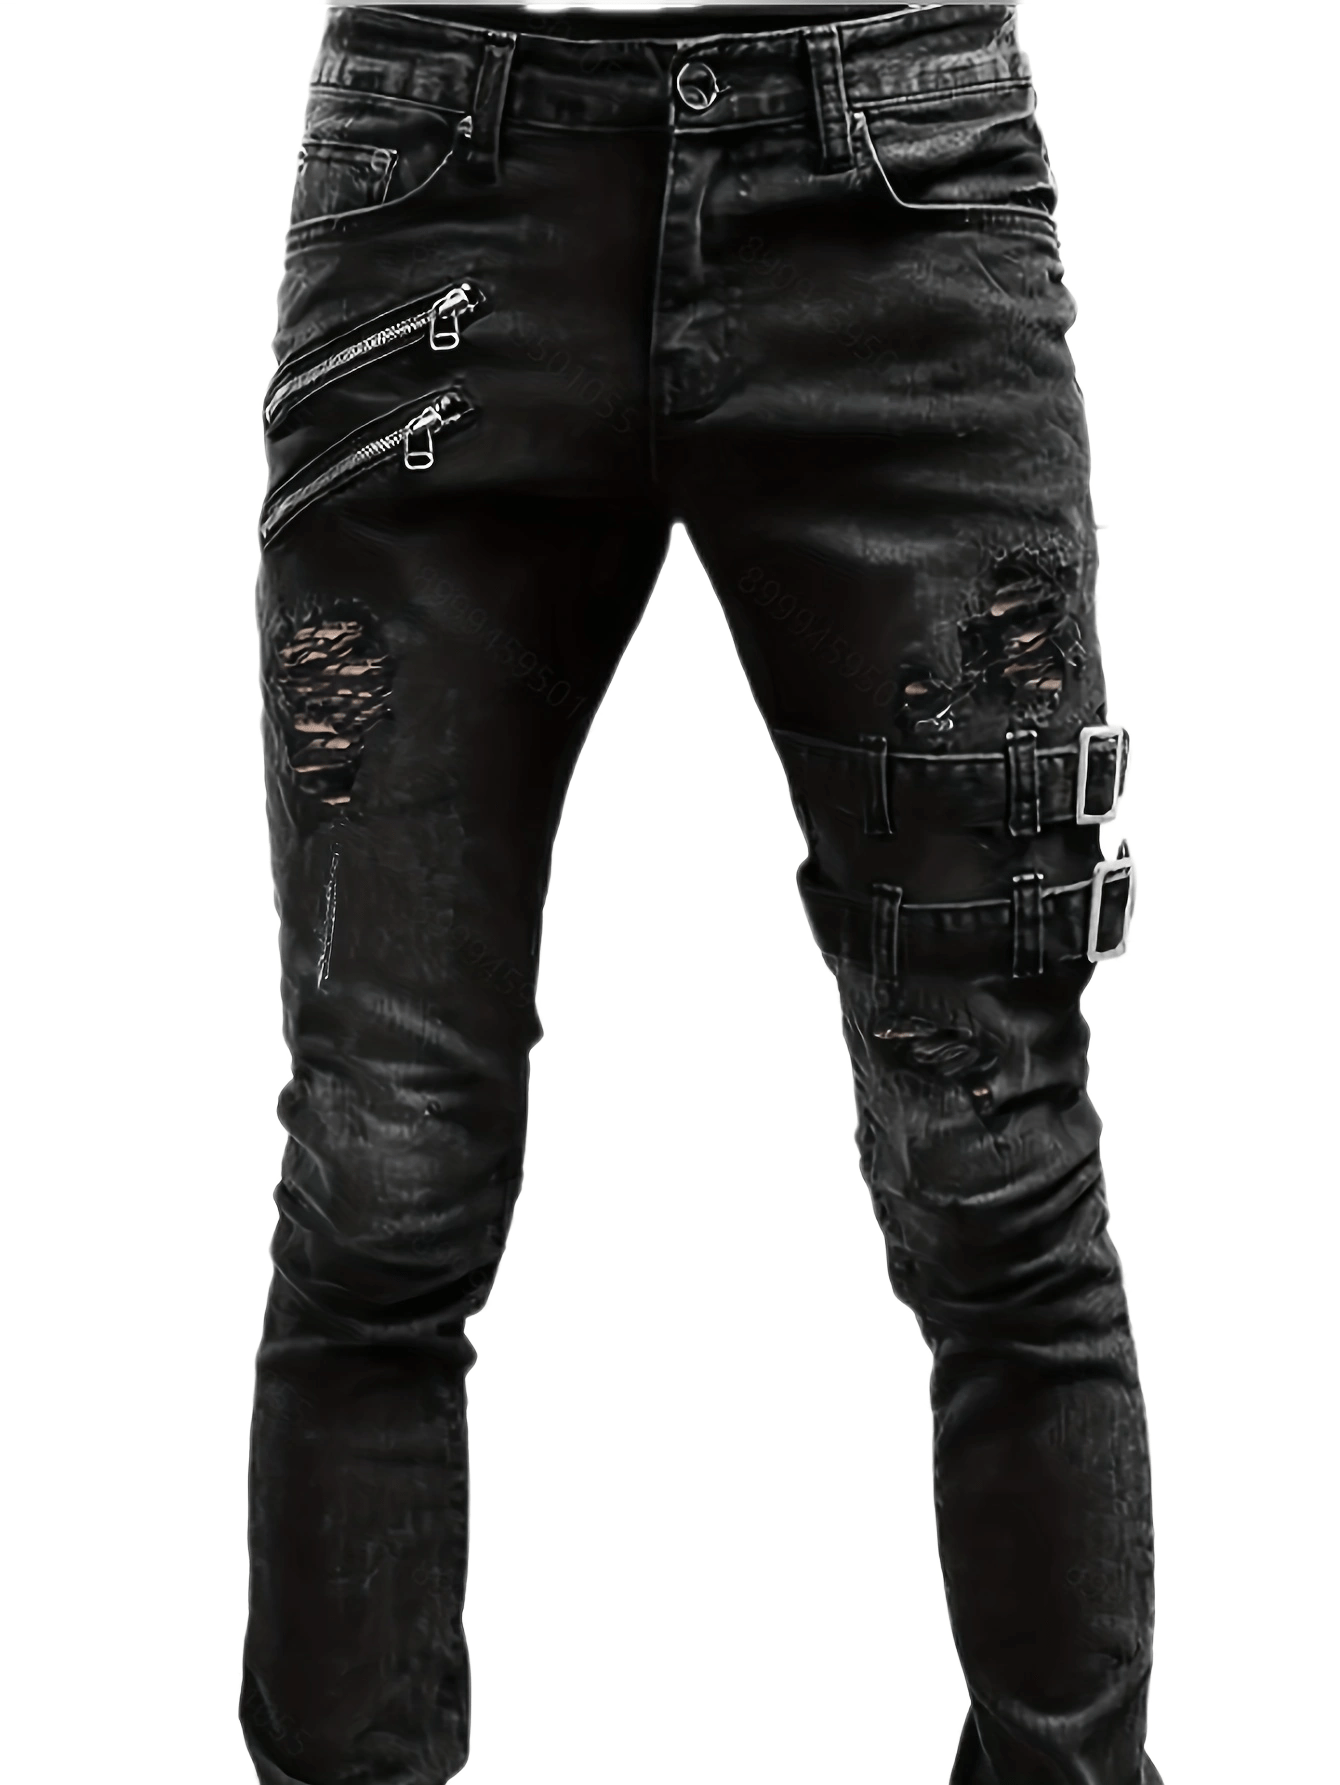 Trendy Ease: Men's Casual Fashion Slim Harem Black Leather Trousers Pants